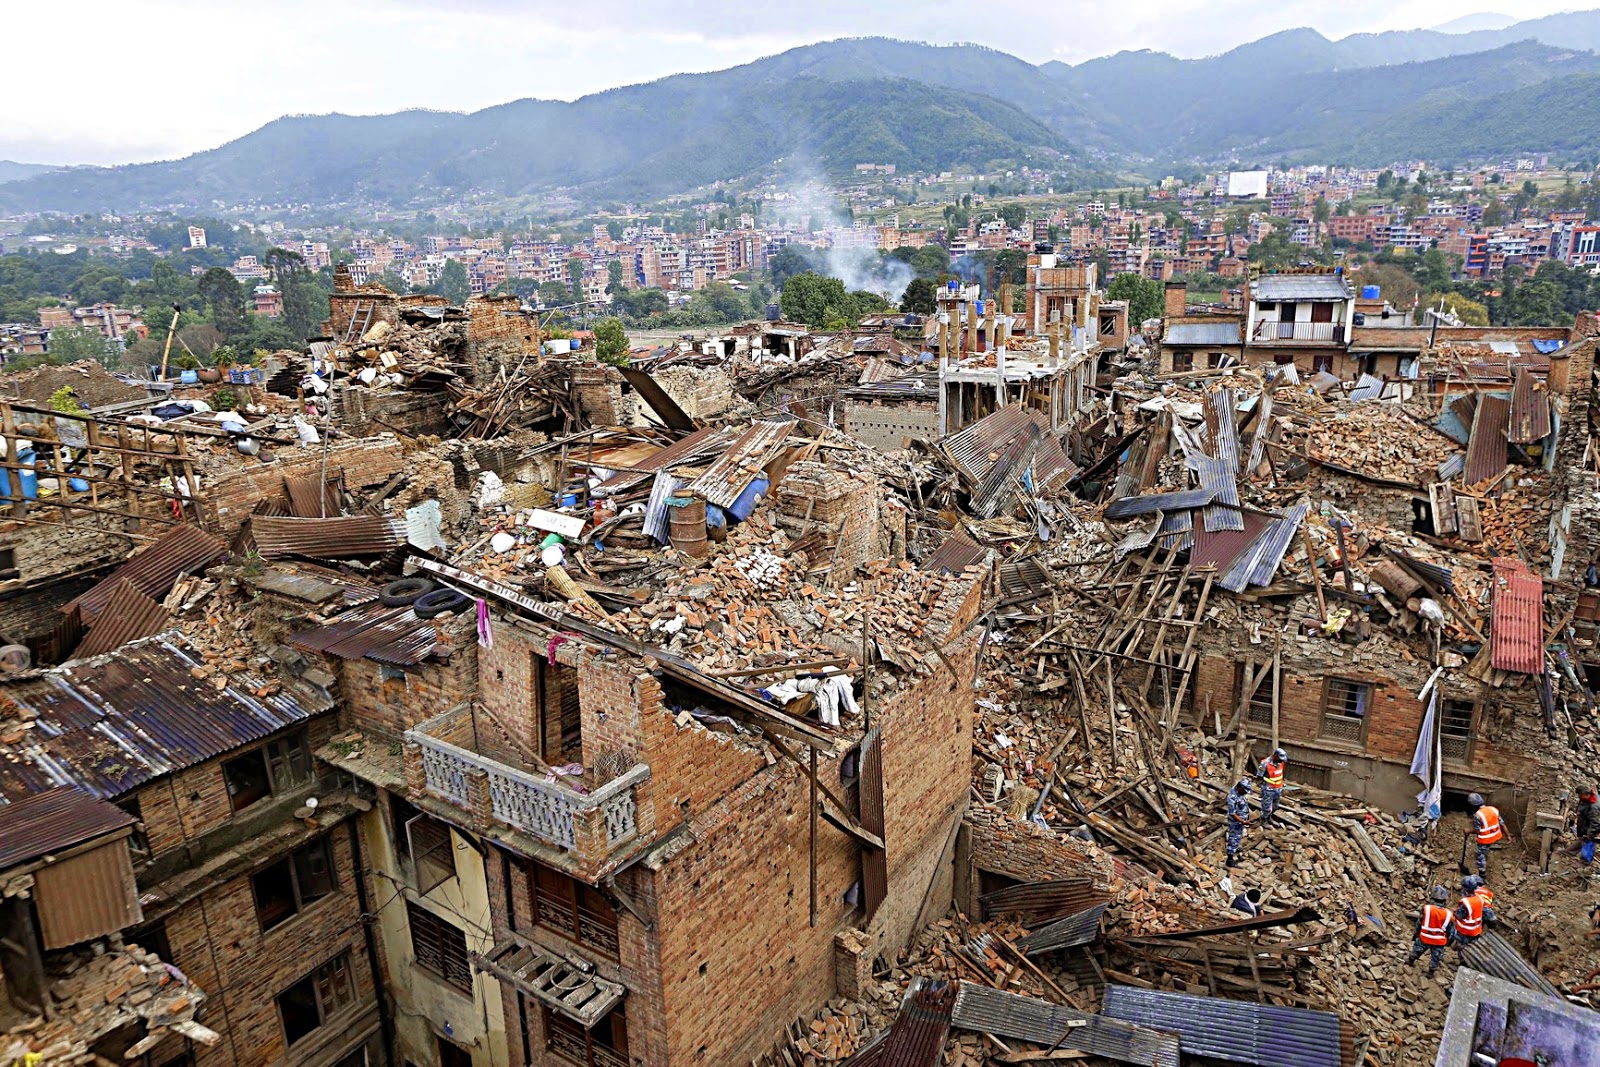 https://theothersshoe.files.wordpress.com/2015/05/nepal-quake-2015-nbc.jpg